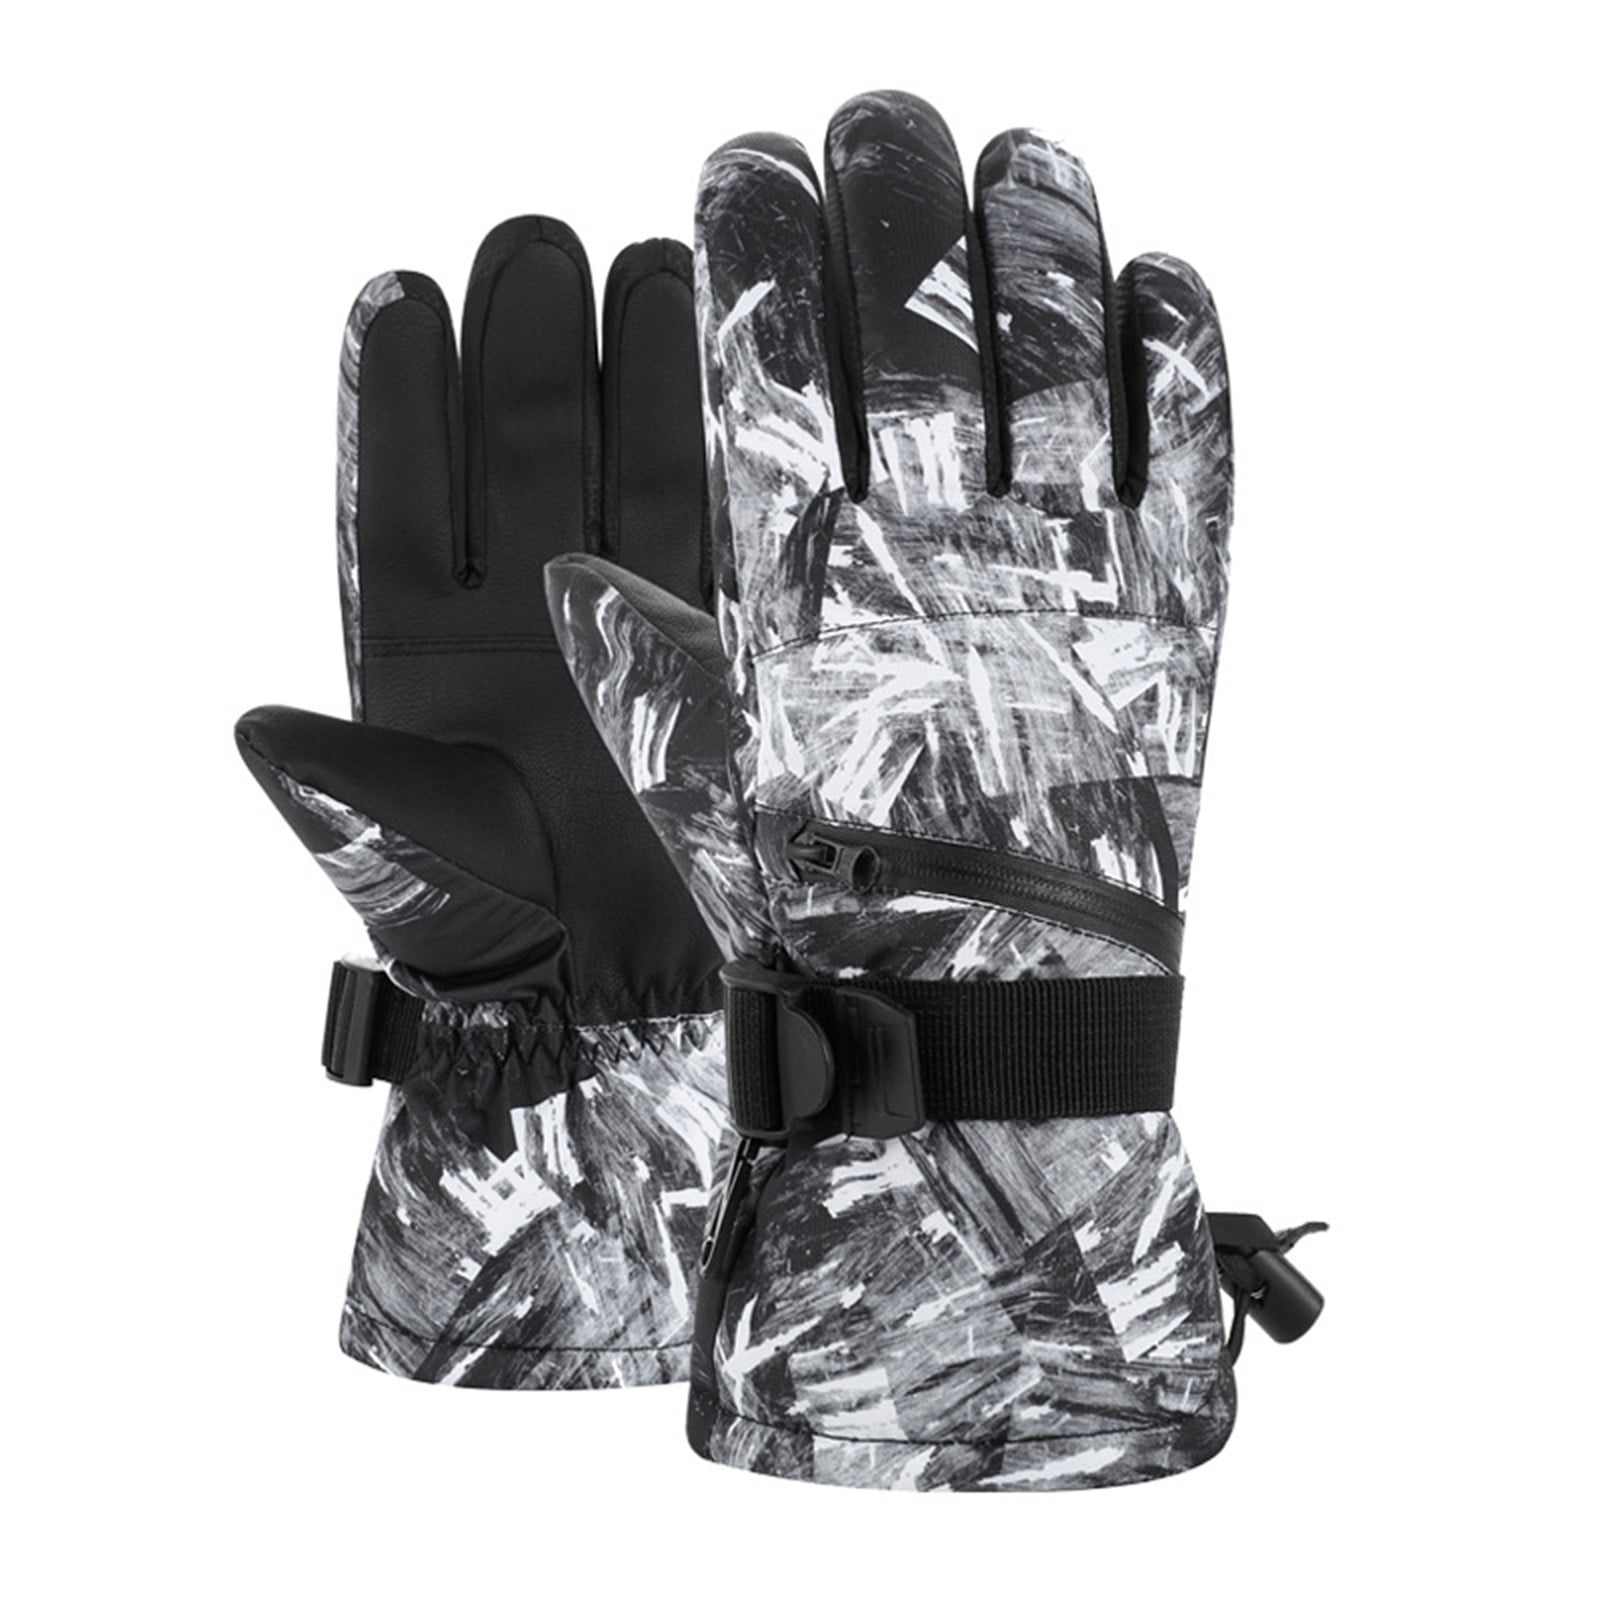 Thermal Warm Waterproof Winter Ski Gloves Touch Screen Mittens Snow Fleece Glove